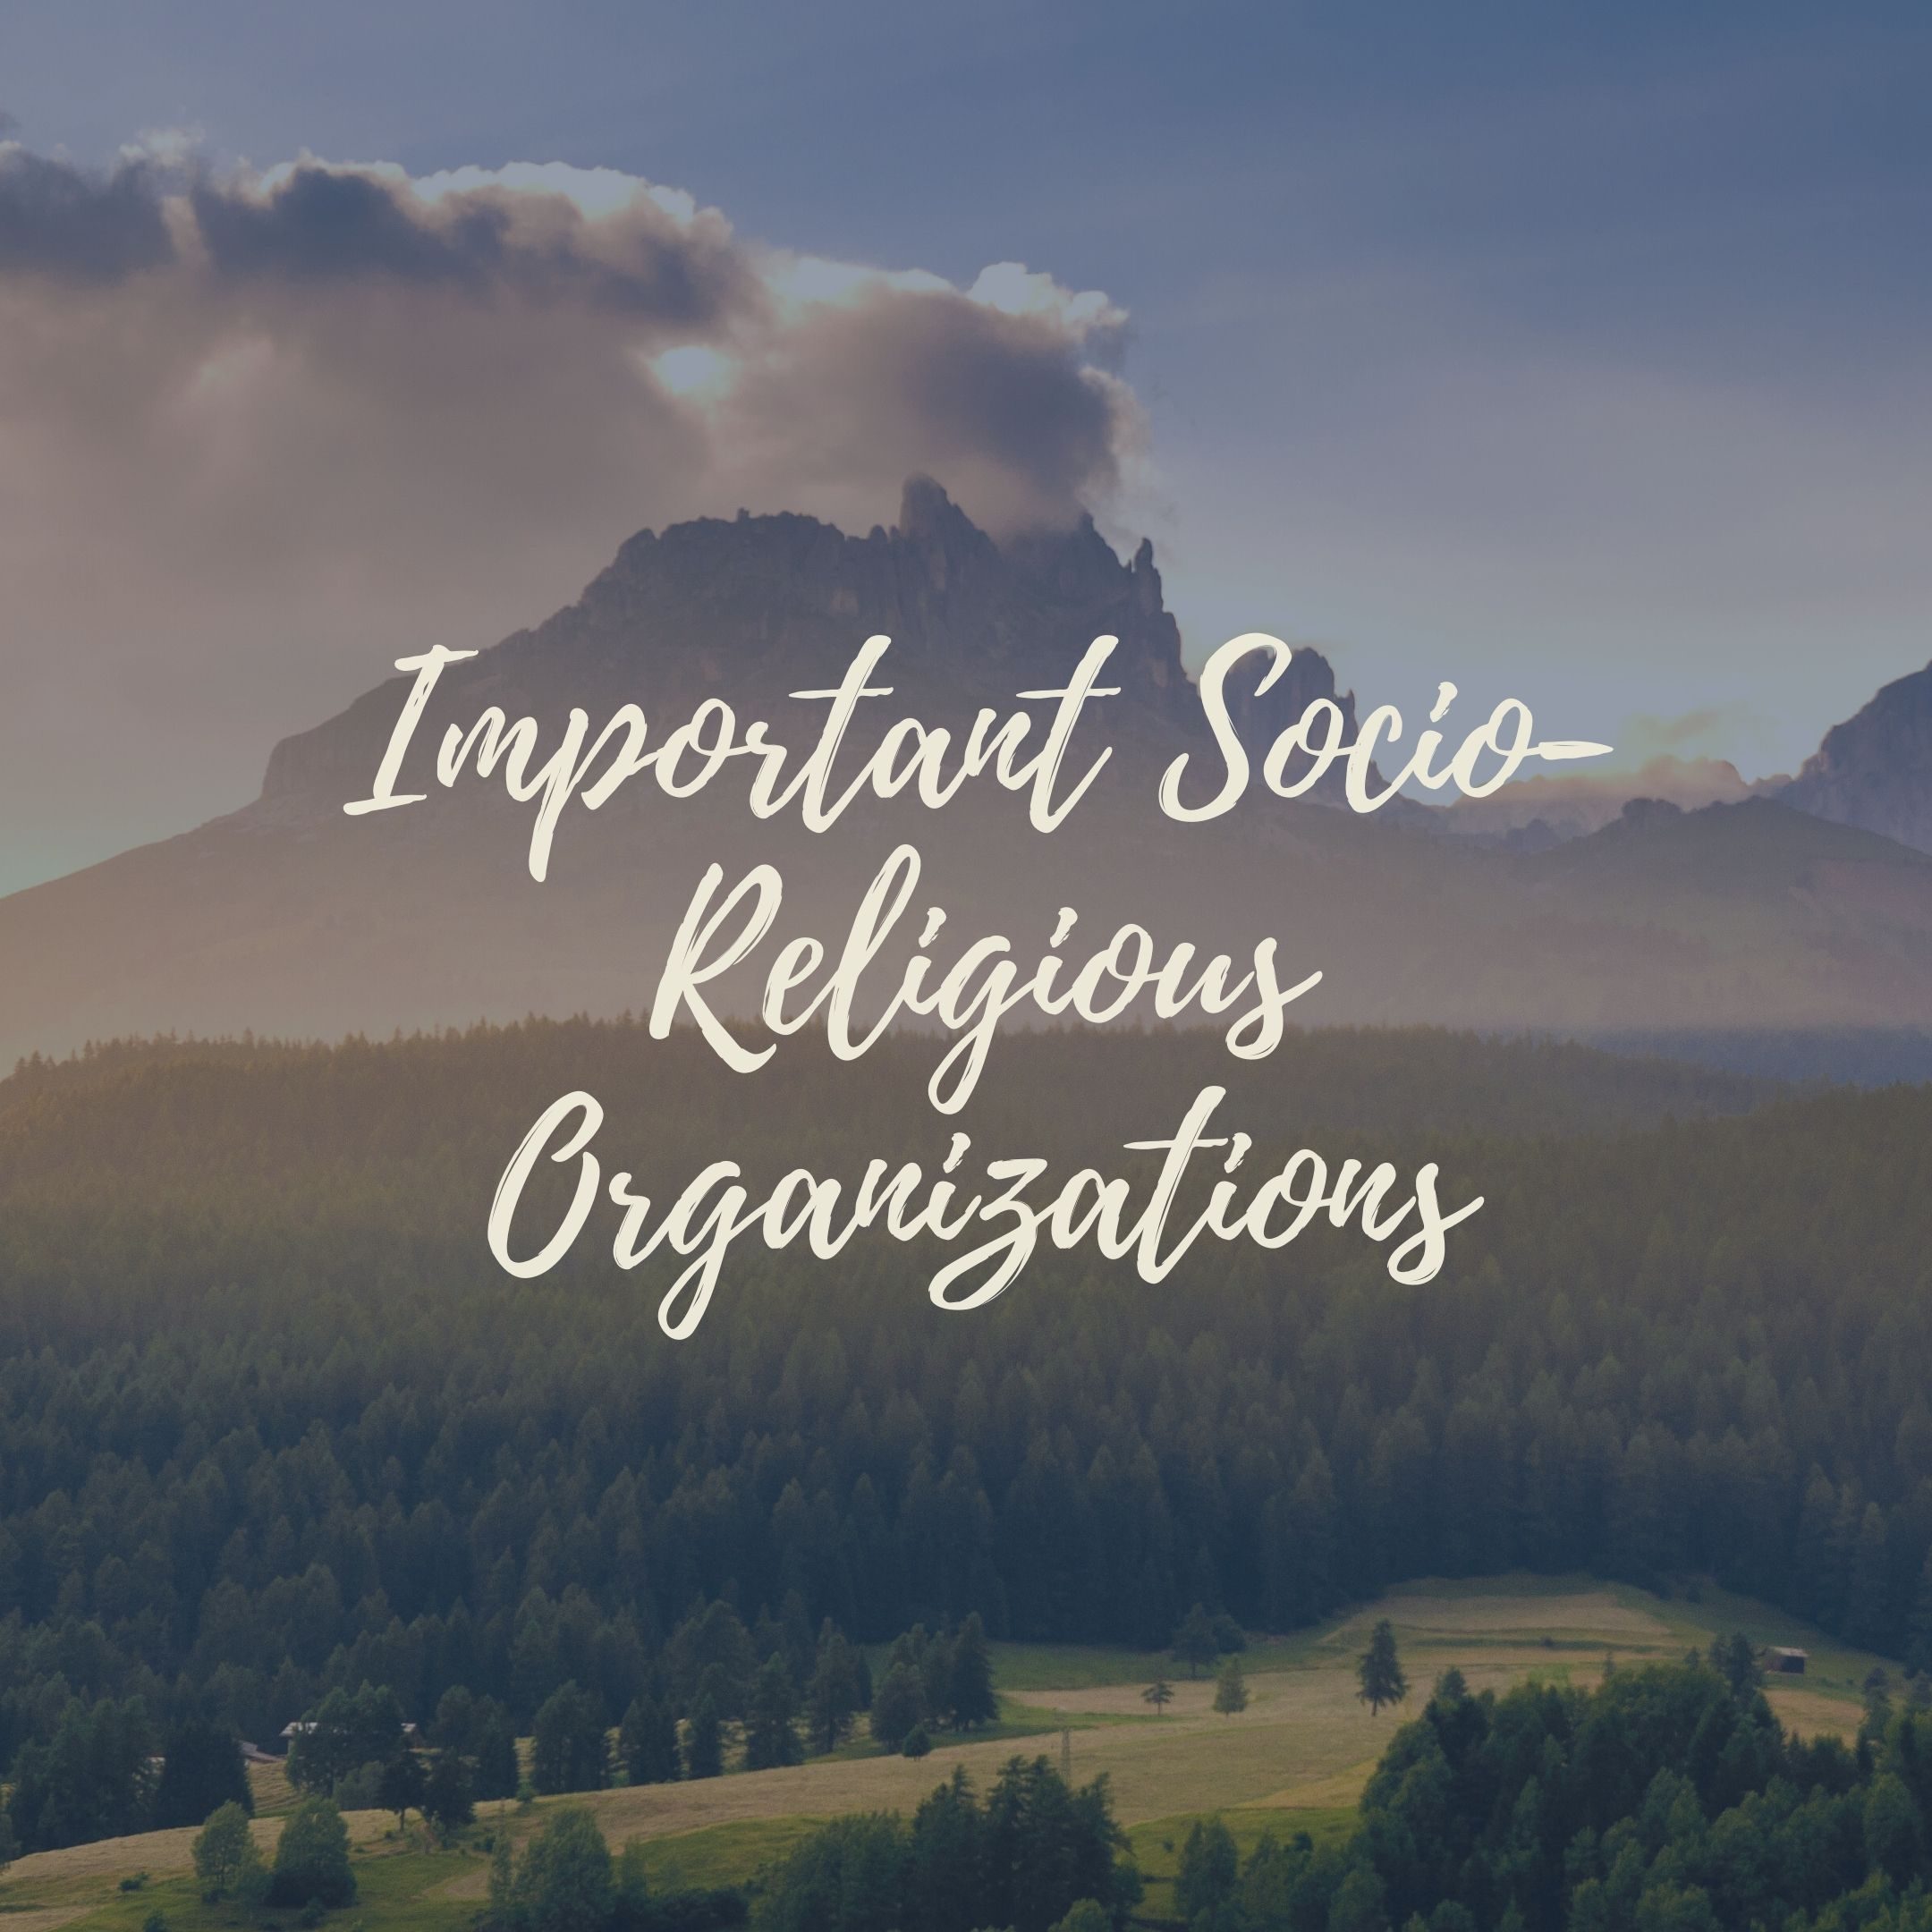 Important Socio-Religious Organizations